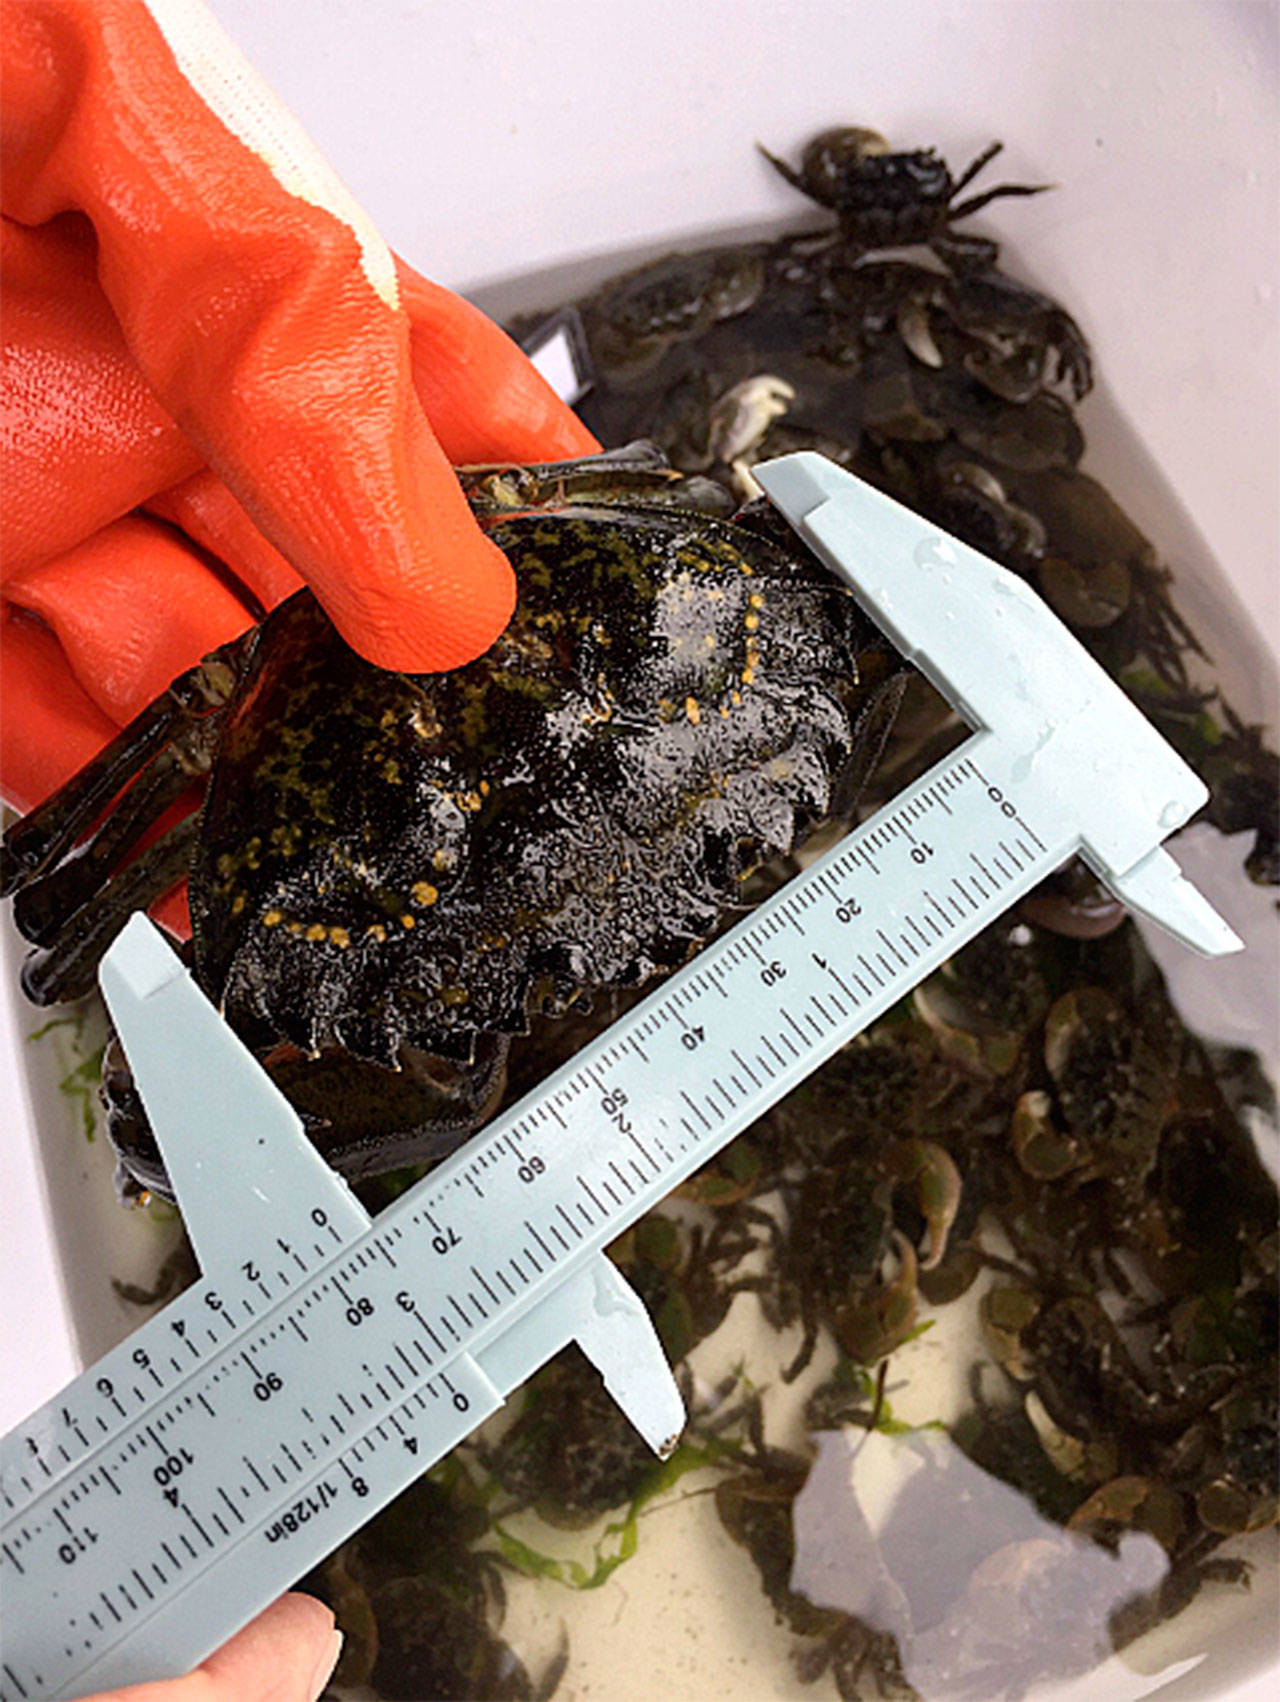 Jefferson County’s first European green crab was captured on Sept. 8 on Kala Point near Port Townsend. (W. Feltham/C. Jones)